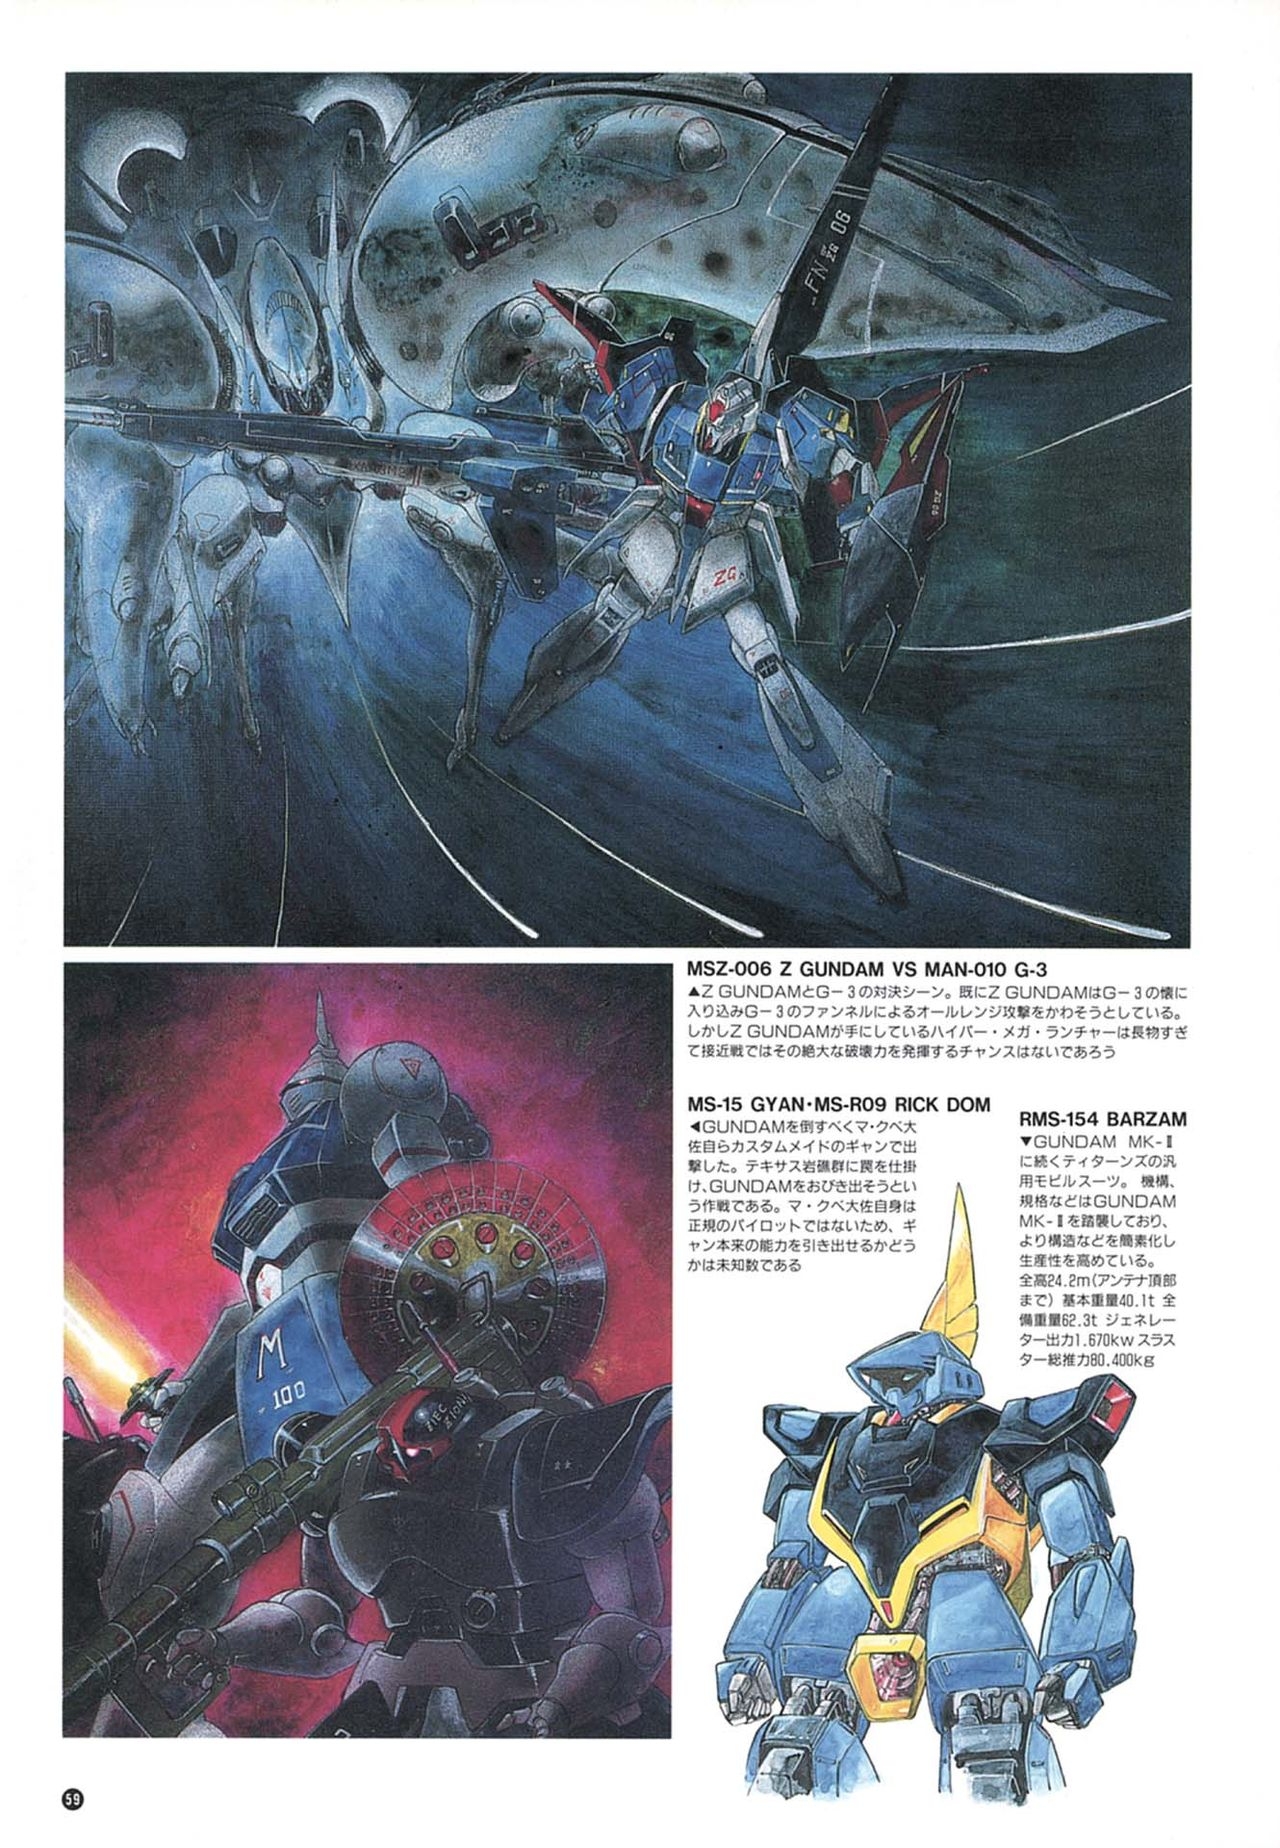 [Kazuhisa Kondo] Kazuhisa Kondo 2D & 3D Works - Go Ahead - From Mobile Suit Gundam to Original Mechanism 58